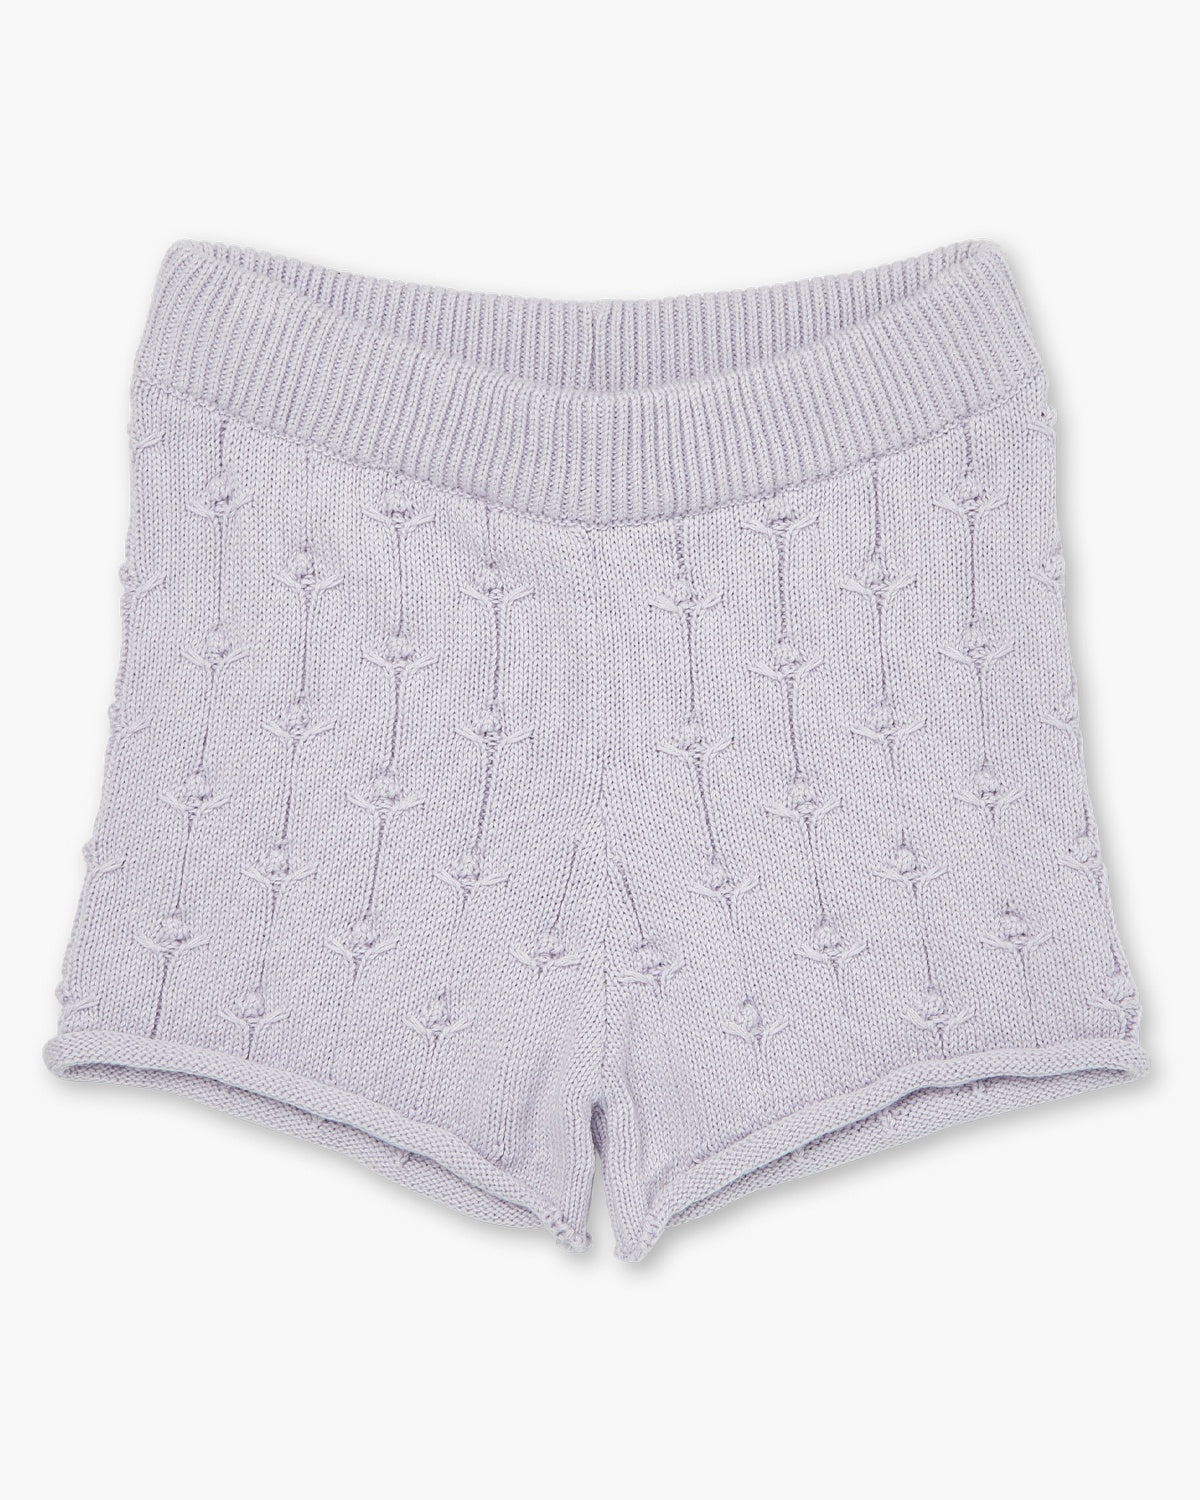 Walnut Baby - Rosalie Knit Shorts - Lilac